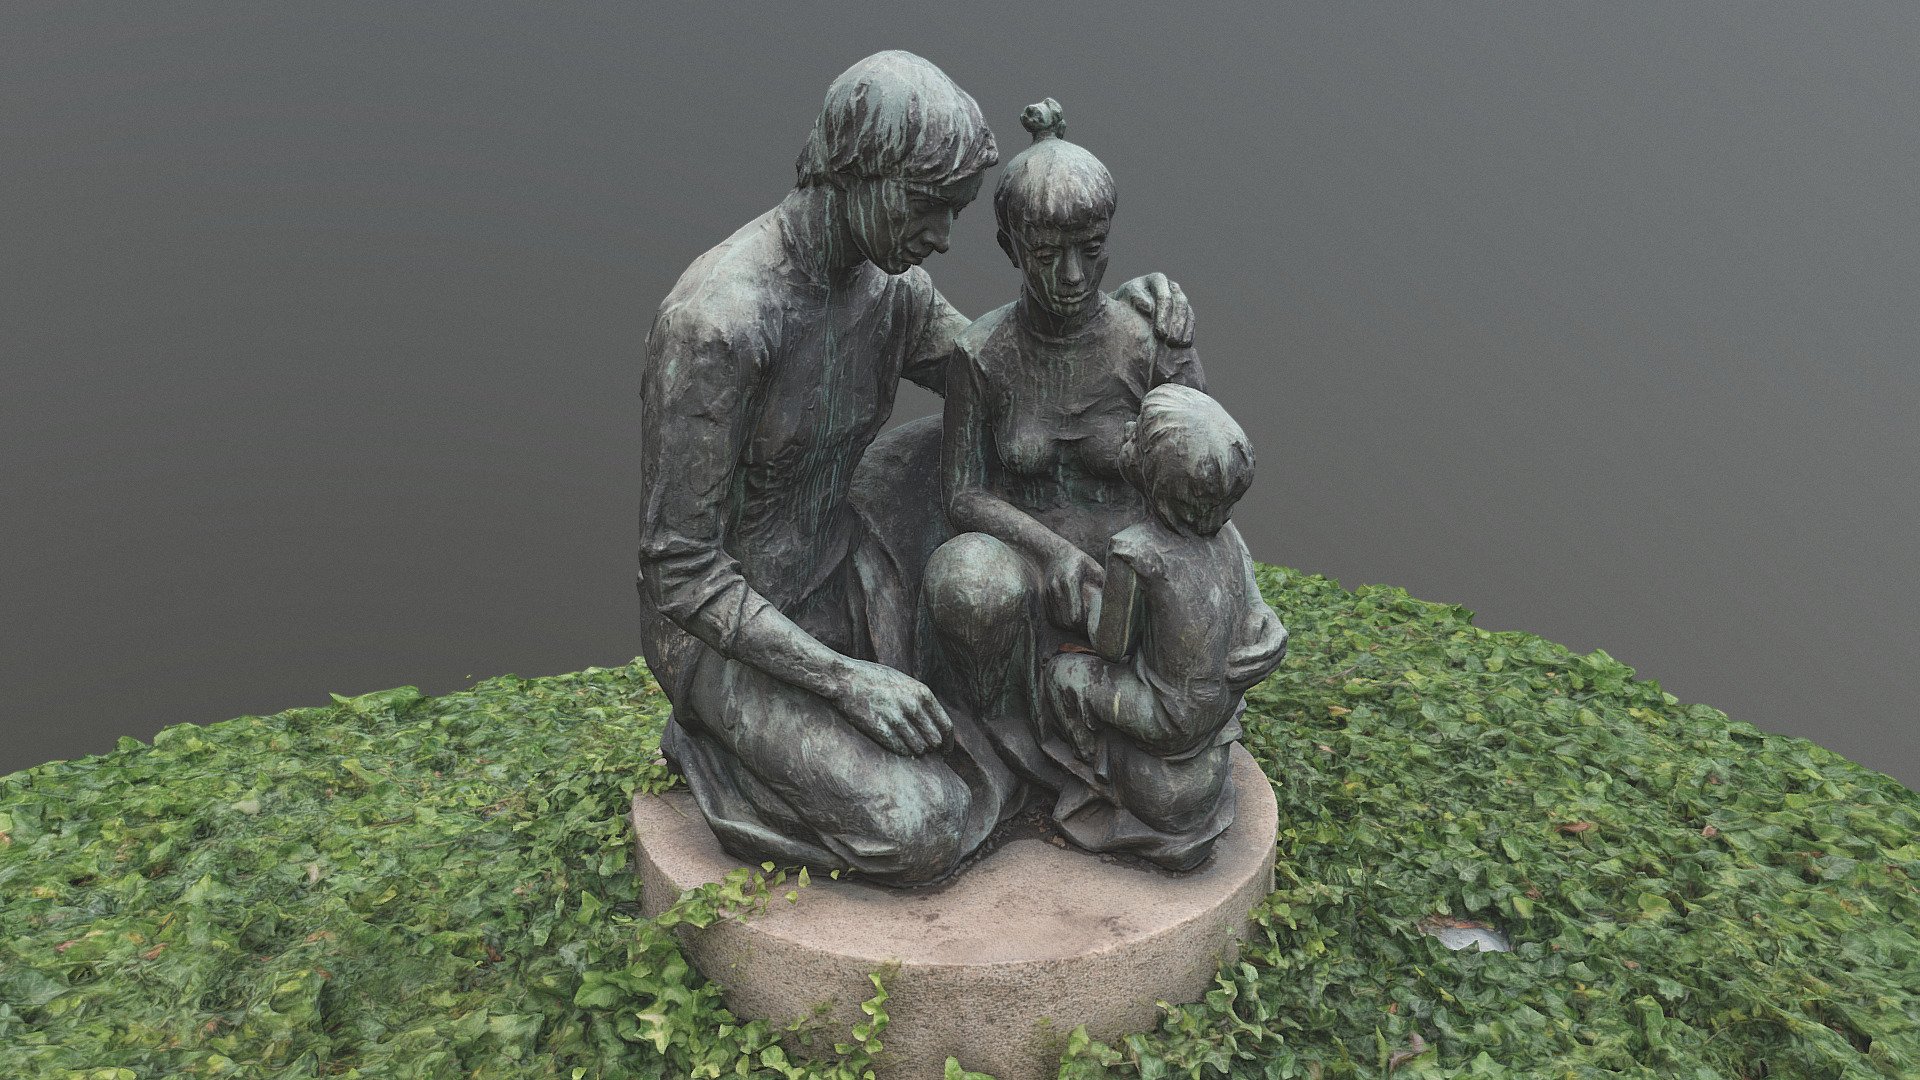 Rodina - Family, public art sculpture statue object

@ Ústí nad Labem CZ, City council • https://goo.gl/maps/NwnAVszcX6r8hVJr7 July 23 2019

photogrammetry scan (24MP, 200+ photos) + Reality capture • https://pavelmatousek.cz - quality reduced for SketchFab - Rodina - Family sculpture - 3D model by matousekfoto 3d model